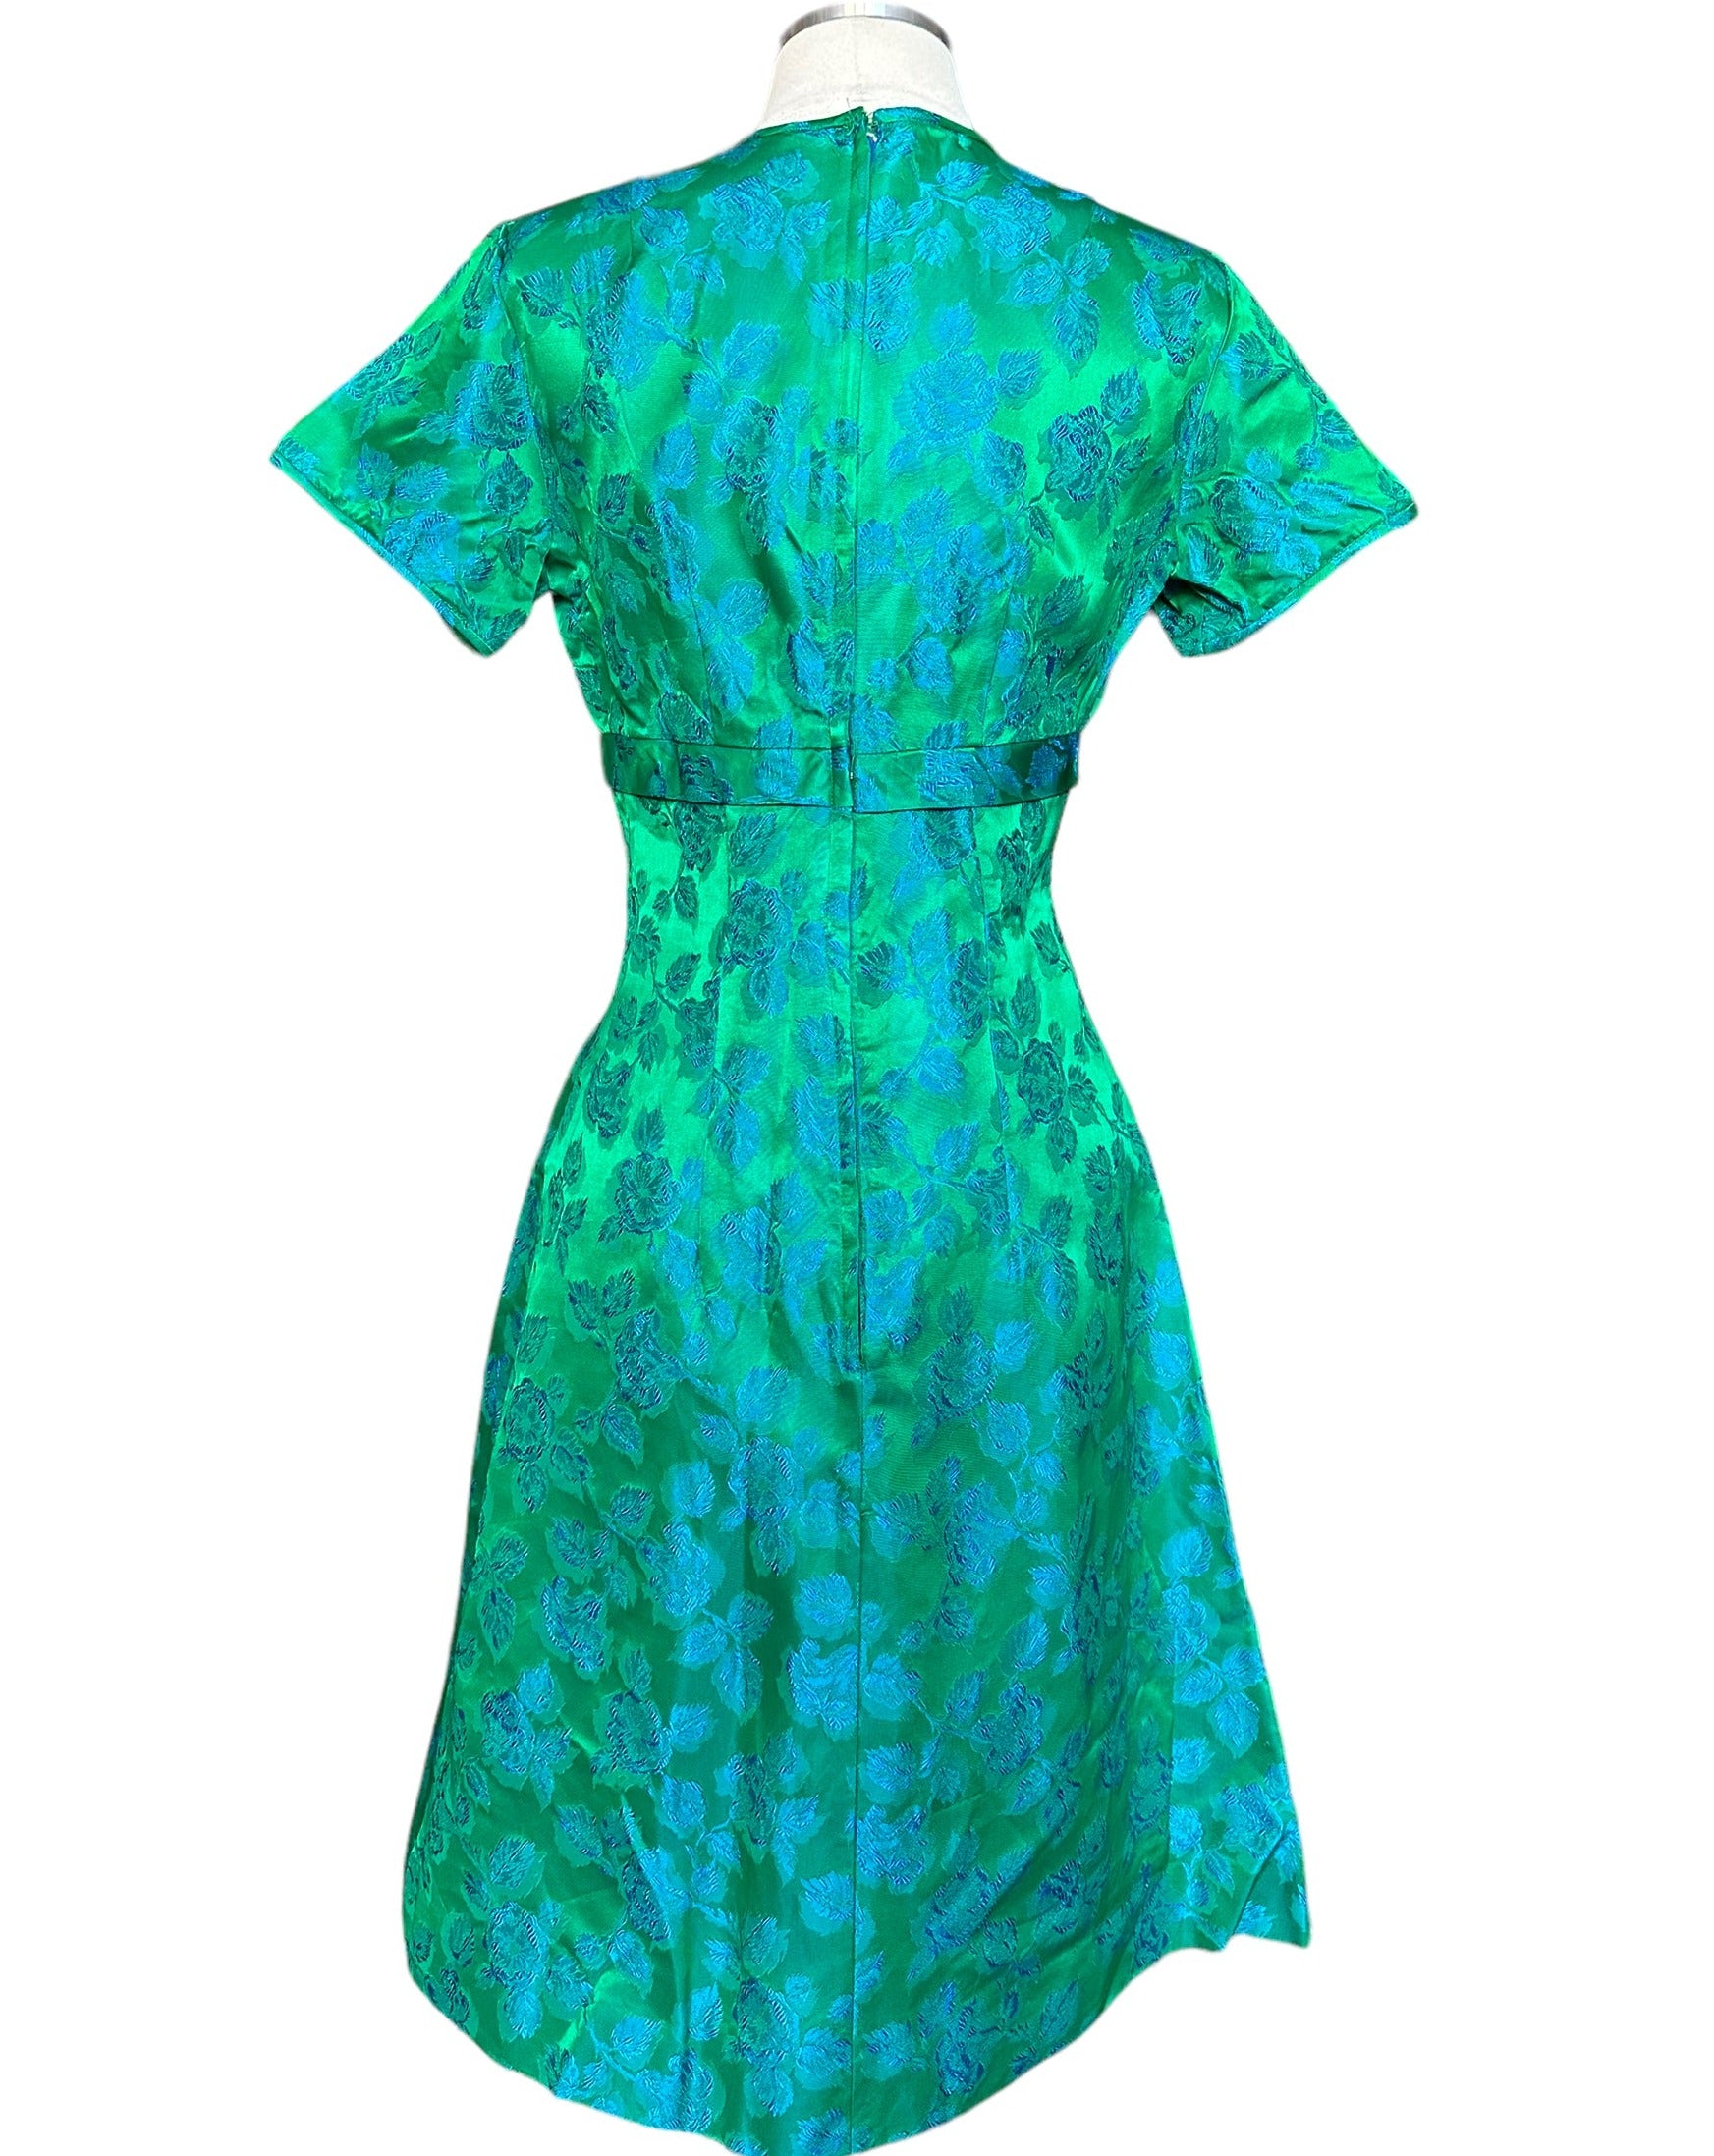 Rear full view of Vintage 1950s Blue/Green Brocade Dress |  Barn Owl Vintage Seattle | True Vintage Dresses